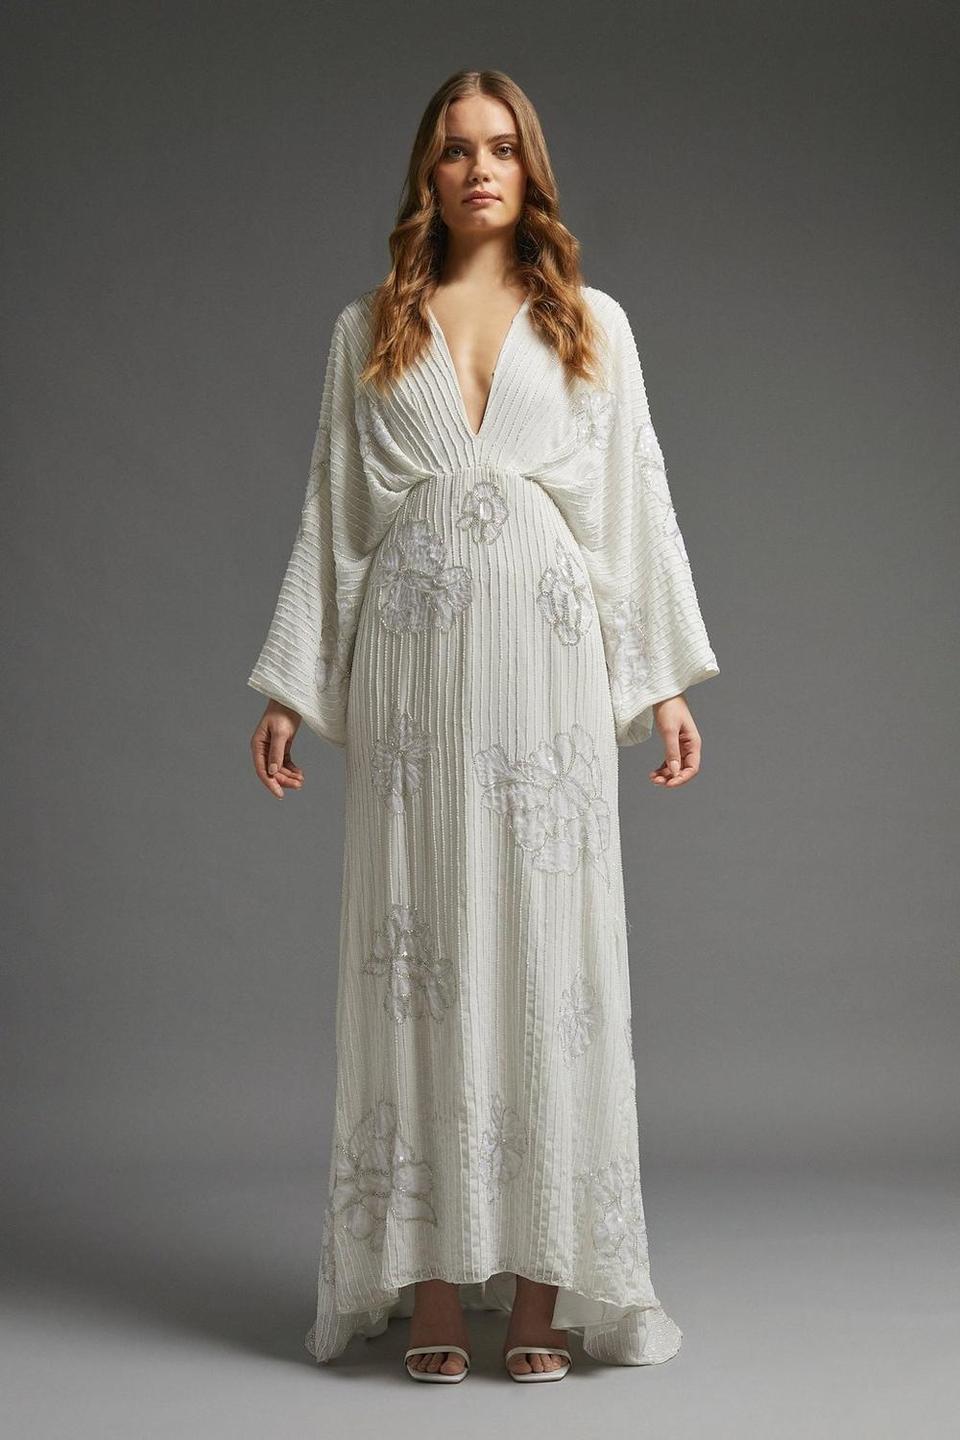 44 Best Long Sleeve Wedding Dresses 2022 - hitched.co.uk - hitched.co.uk